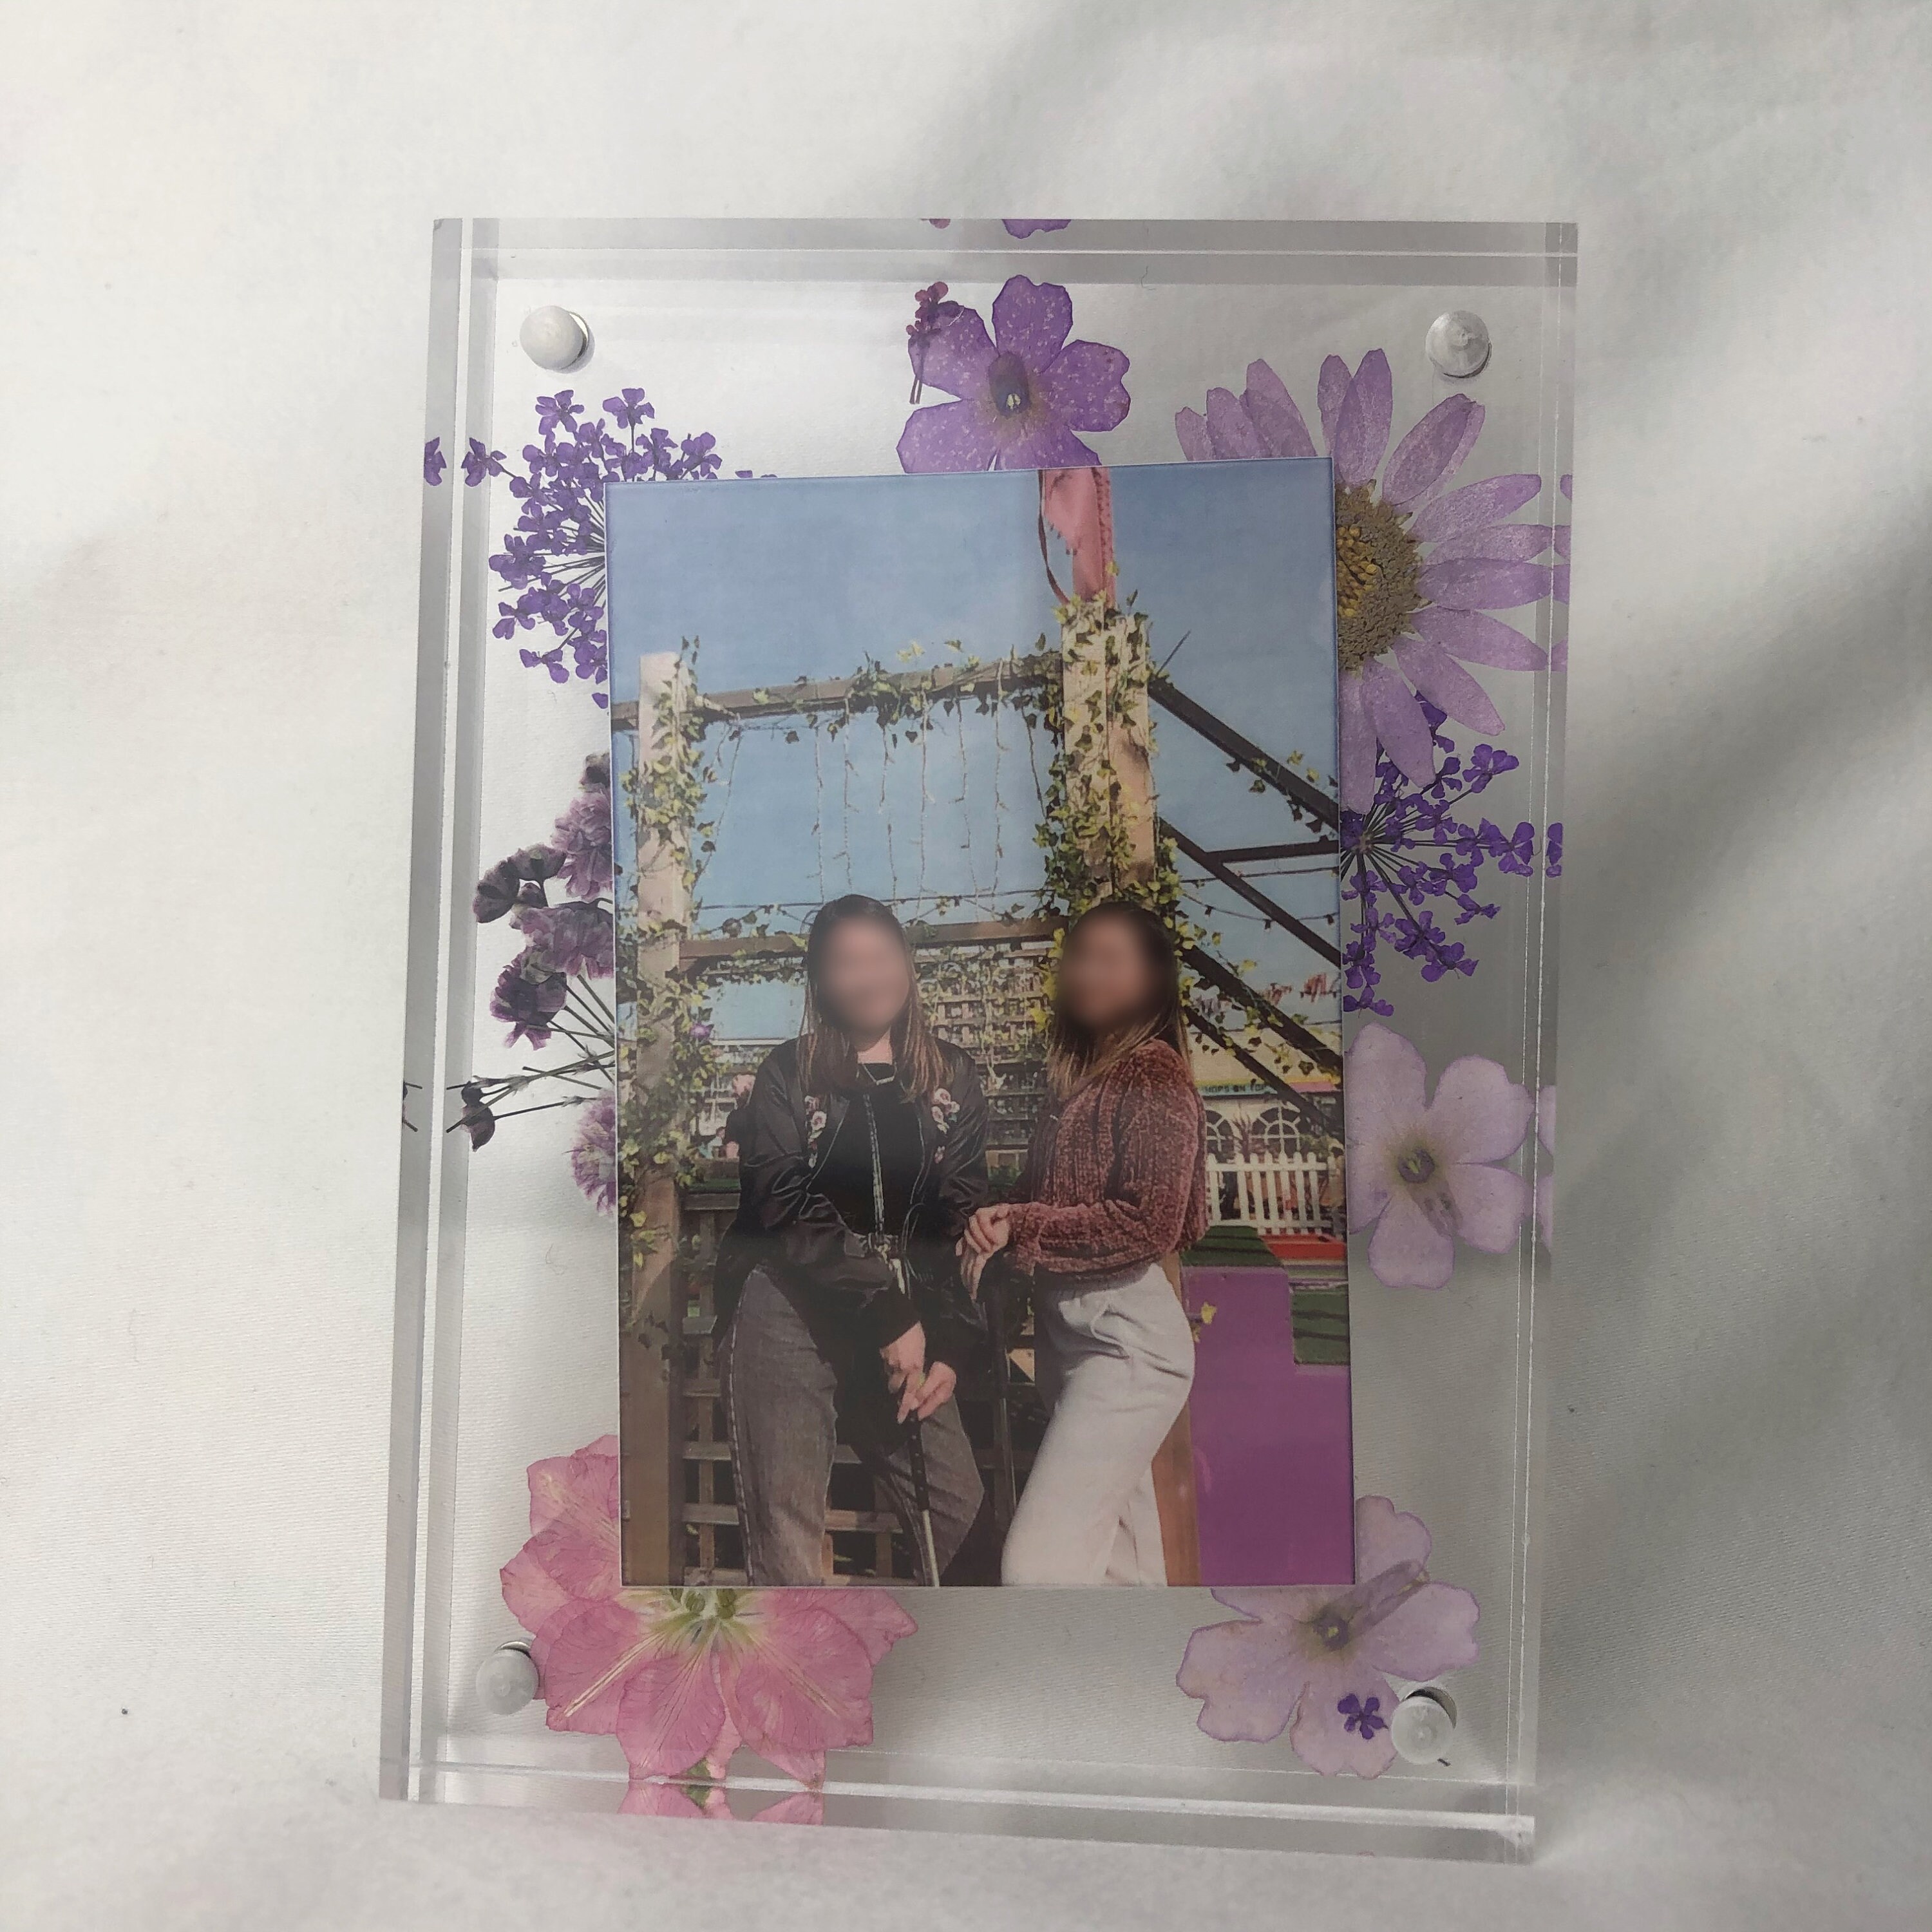 Personalised Polaroid Photo Frame Pressed Flower Frame Homeware